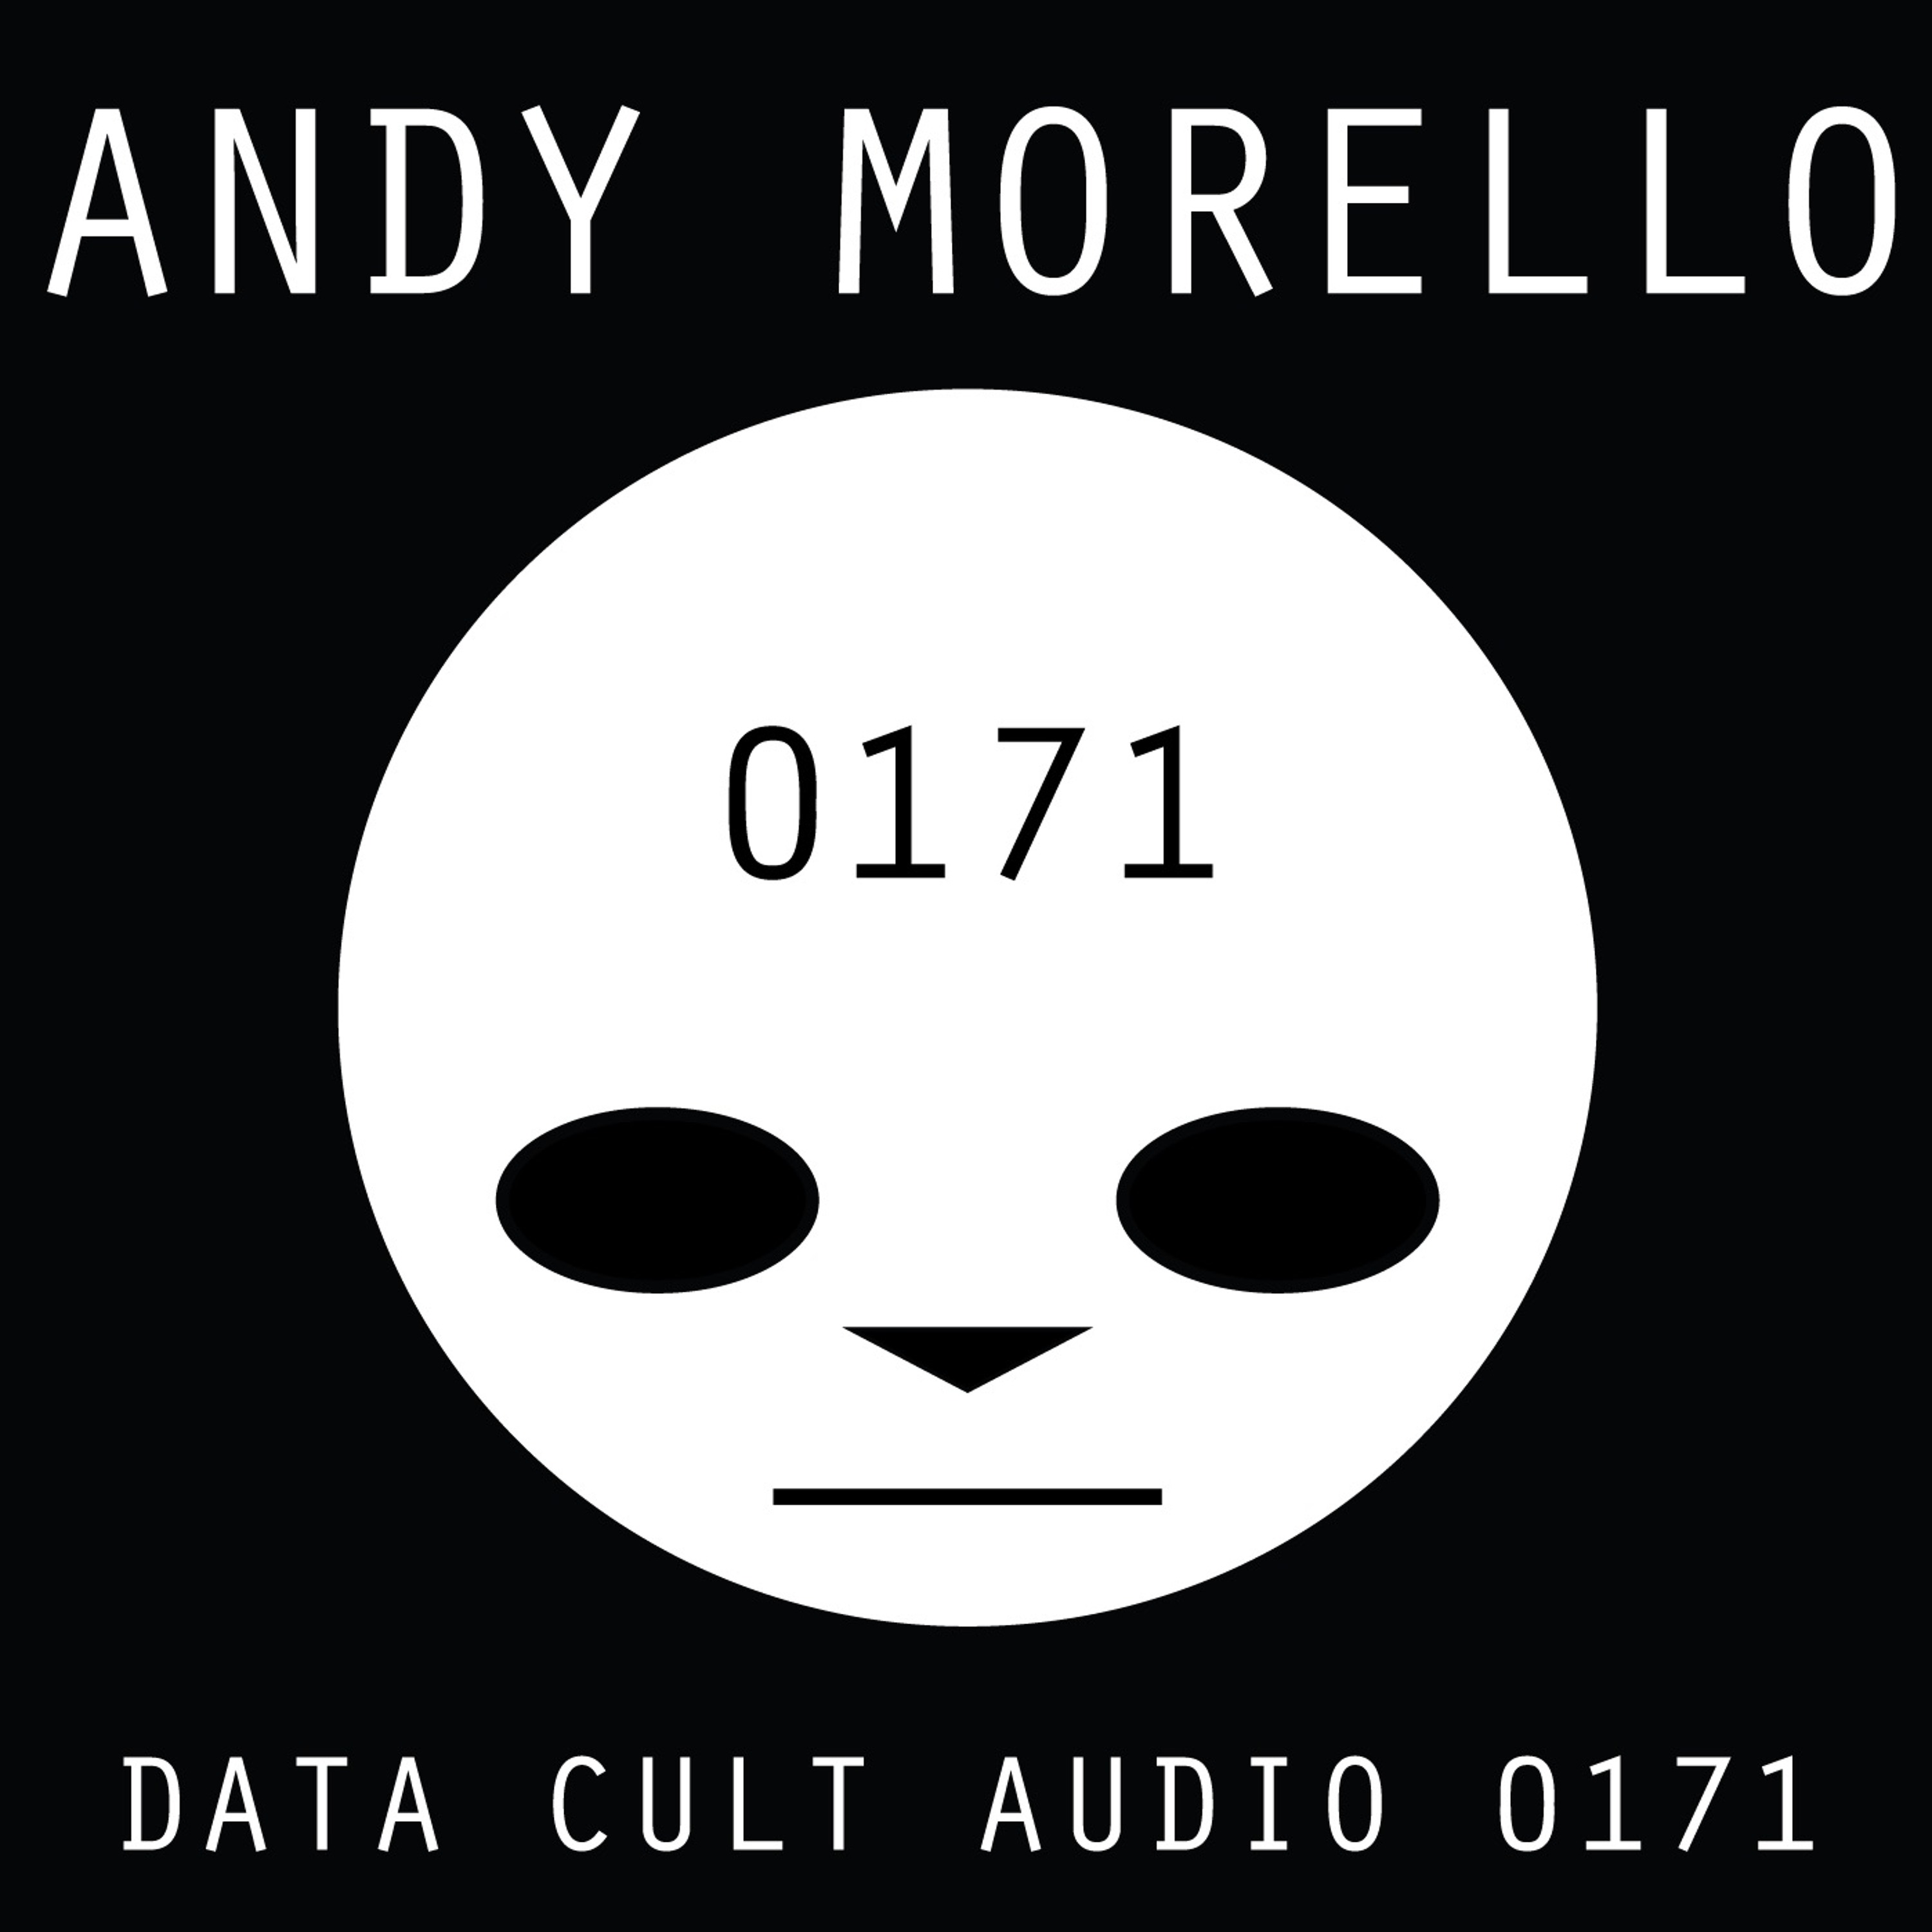 Data Cult Audio 0171 - Andy Morello